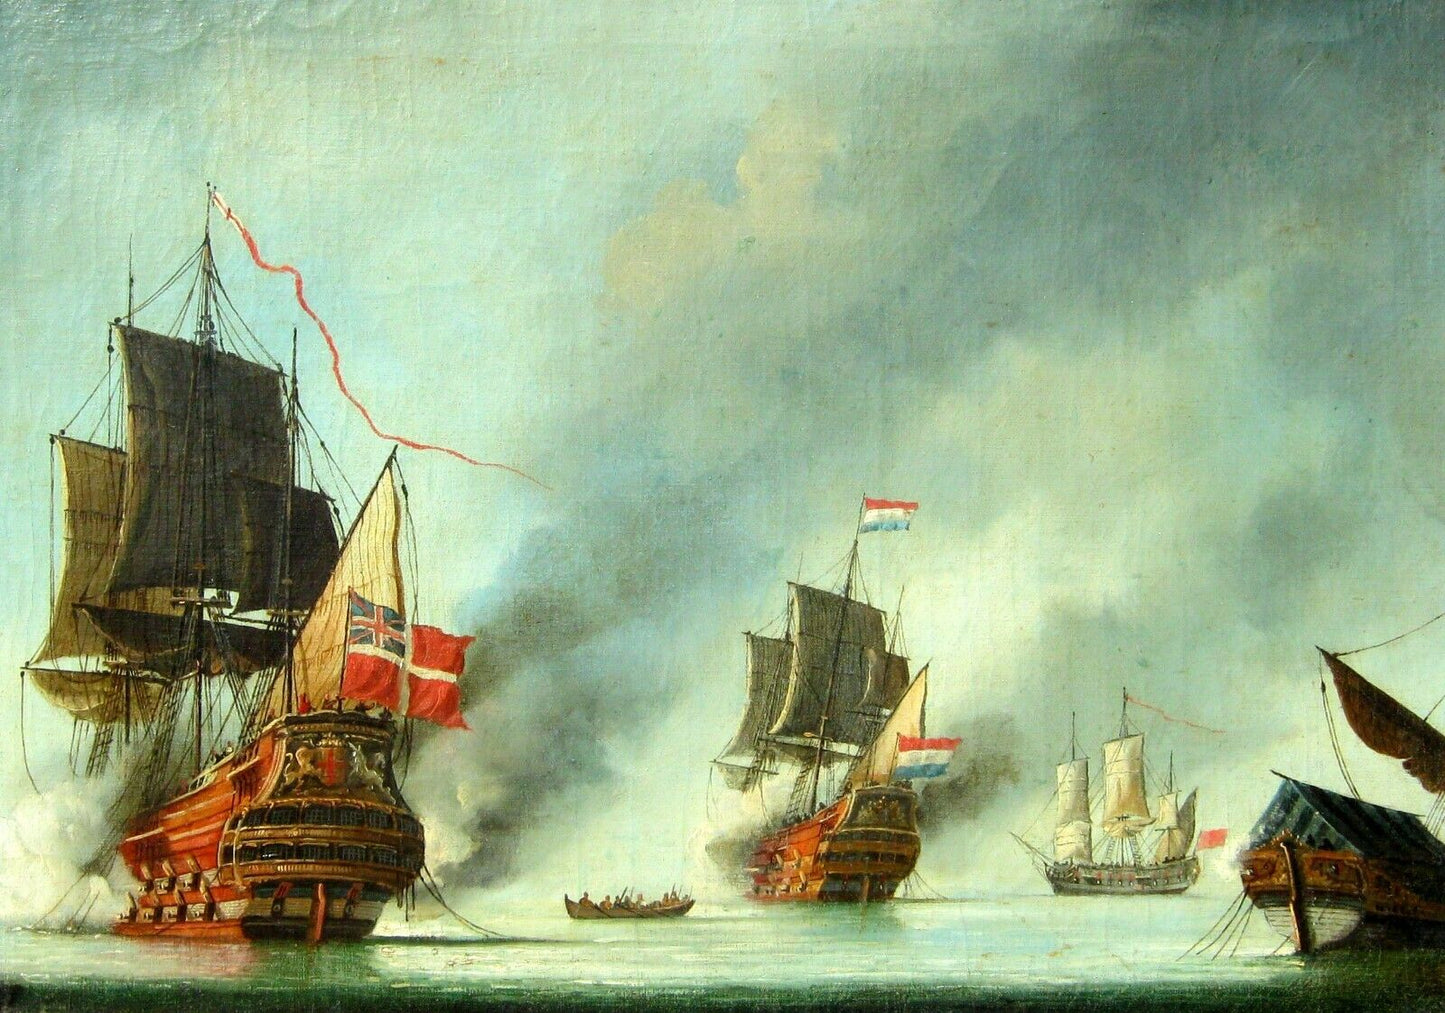 18th - 19th Century Dutch Anglo War Naval Battle Scene Oil on Board